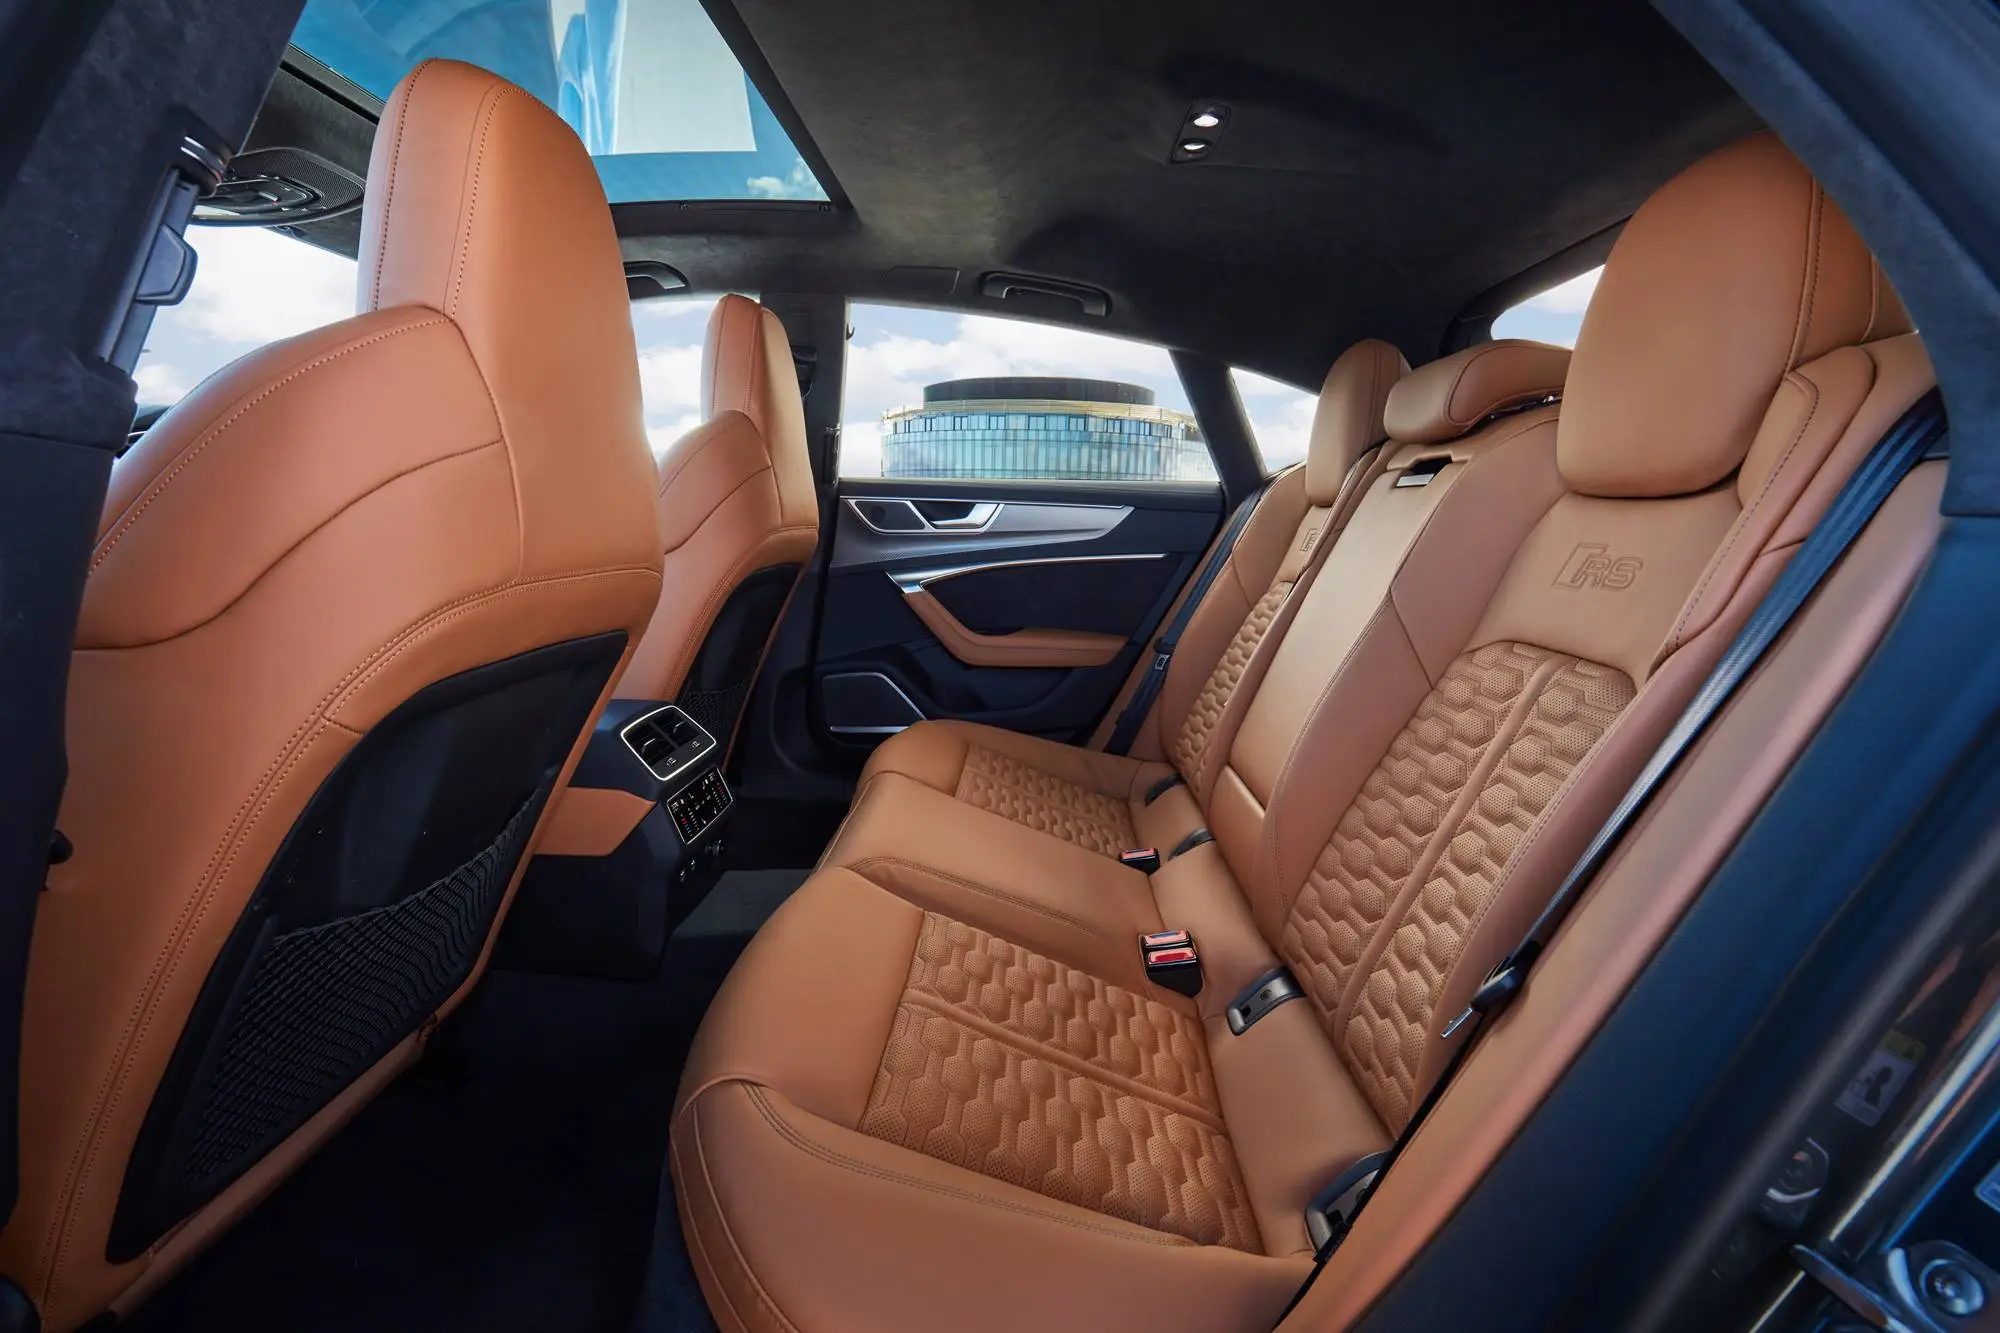 Audi S7 interior - Seats